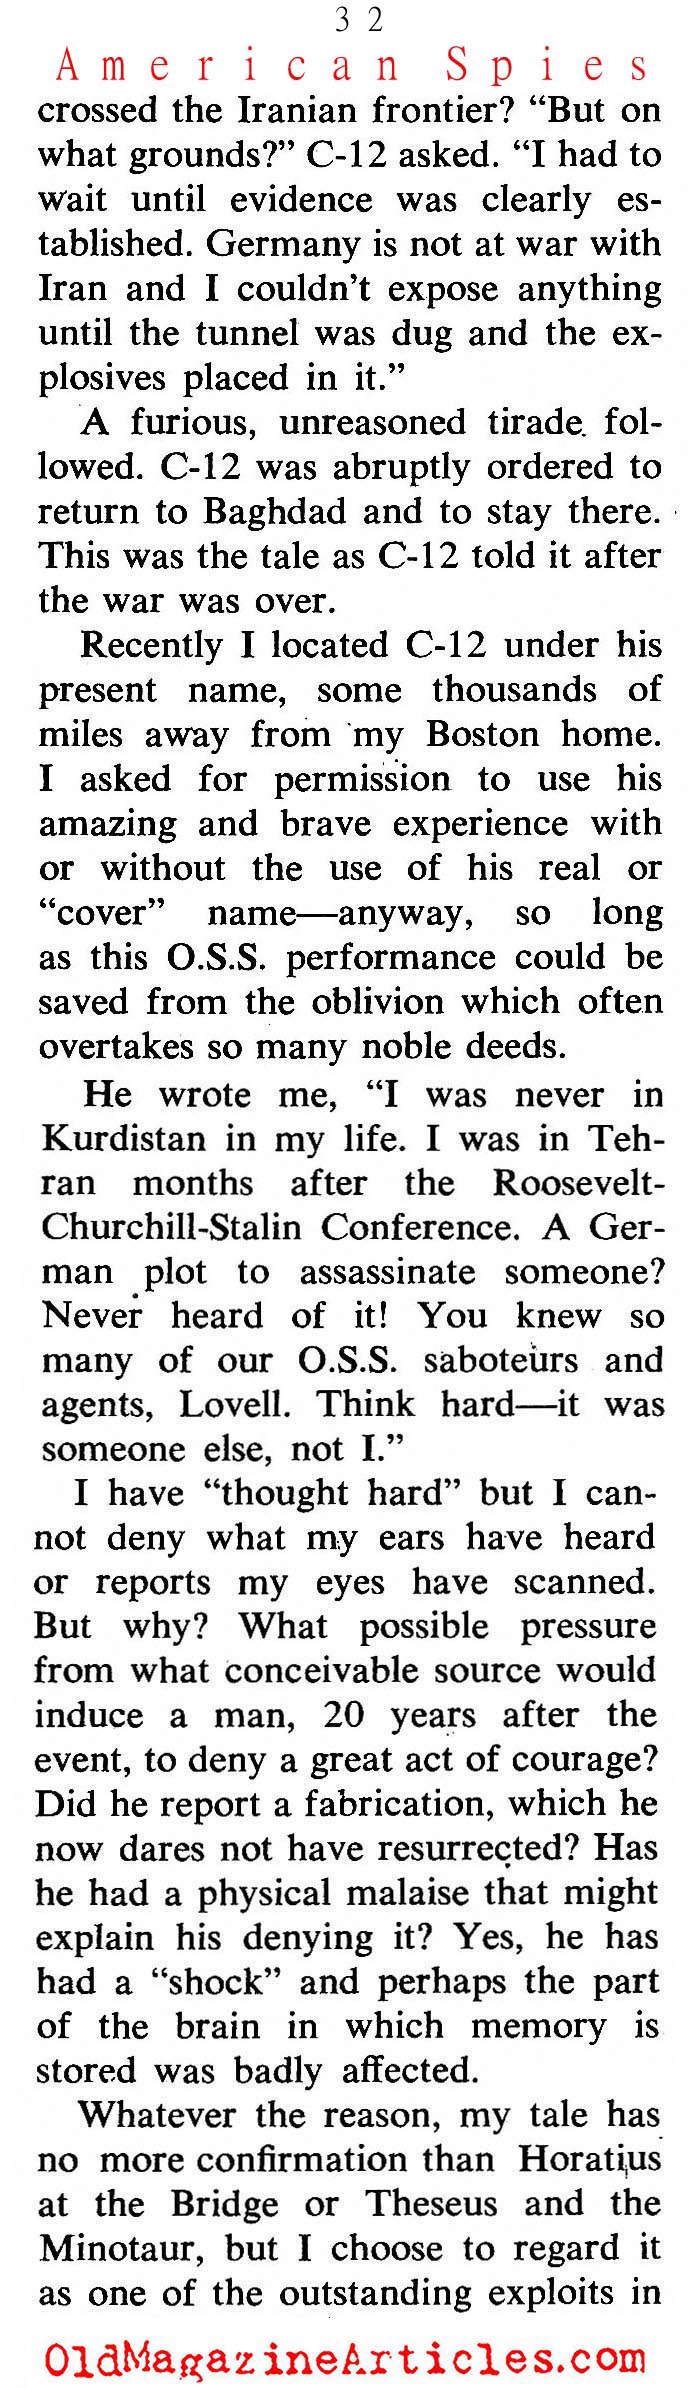 Tales of the O.S.S. (Coronet Magazine, 1964)